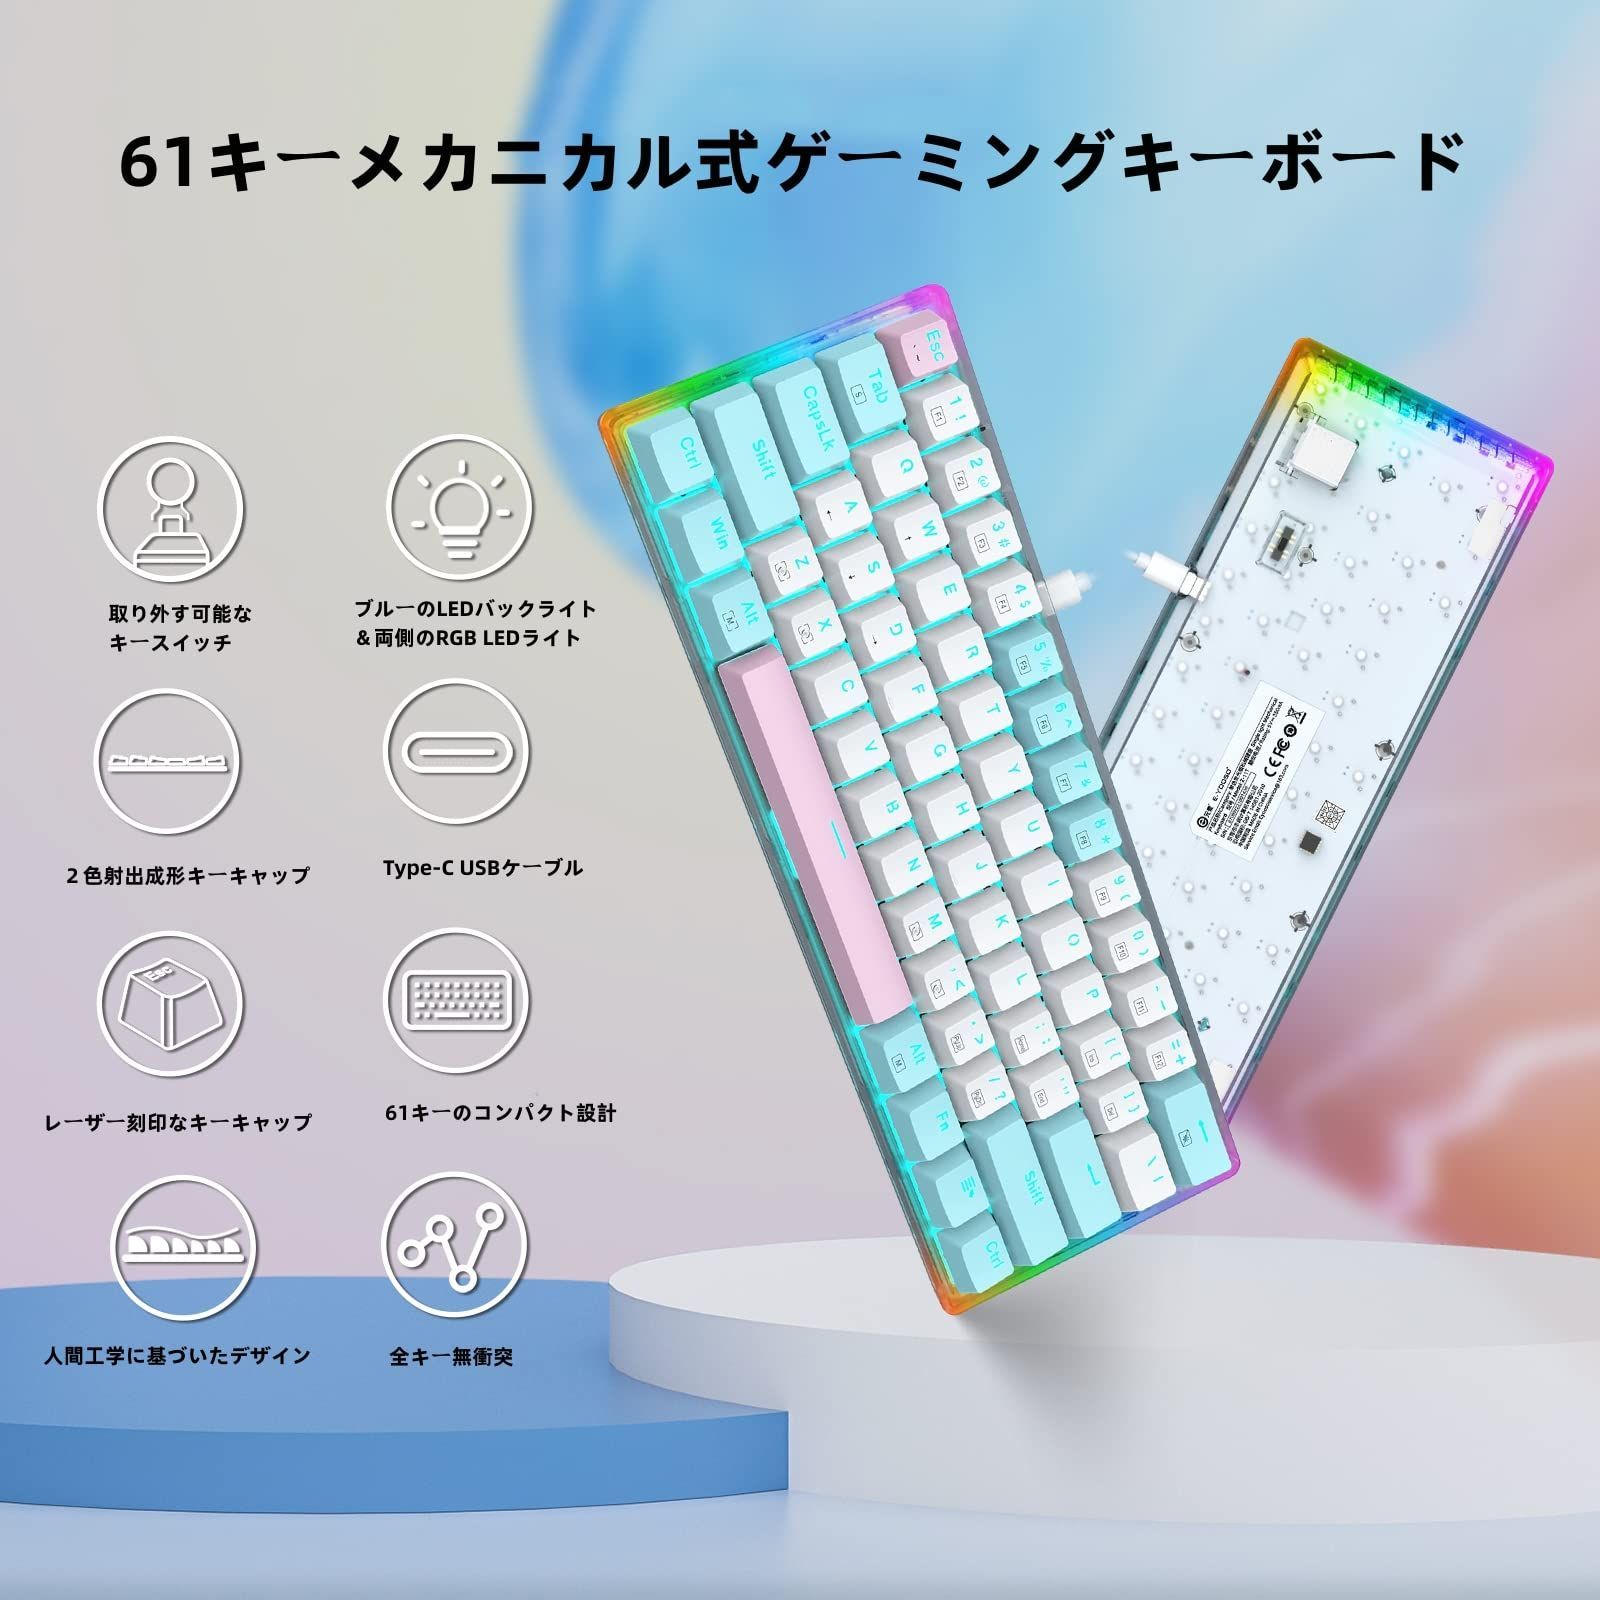 PC/タブレット【色:青軸・ピンク】e元素ゲーミングキーボード81キー 青軸を採用のメカニカルキ